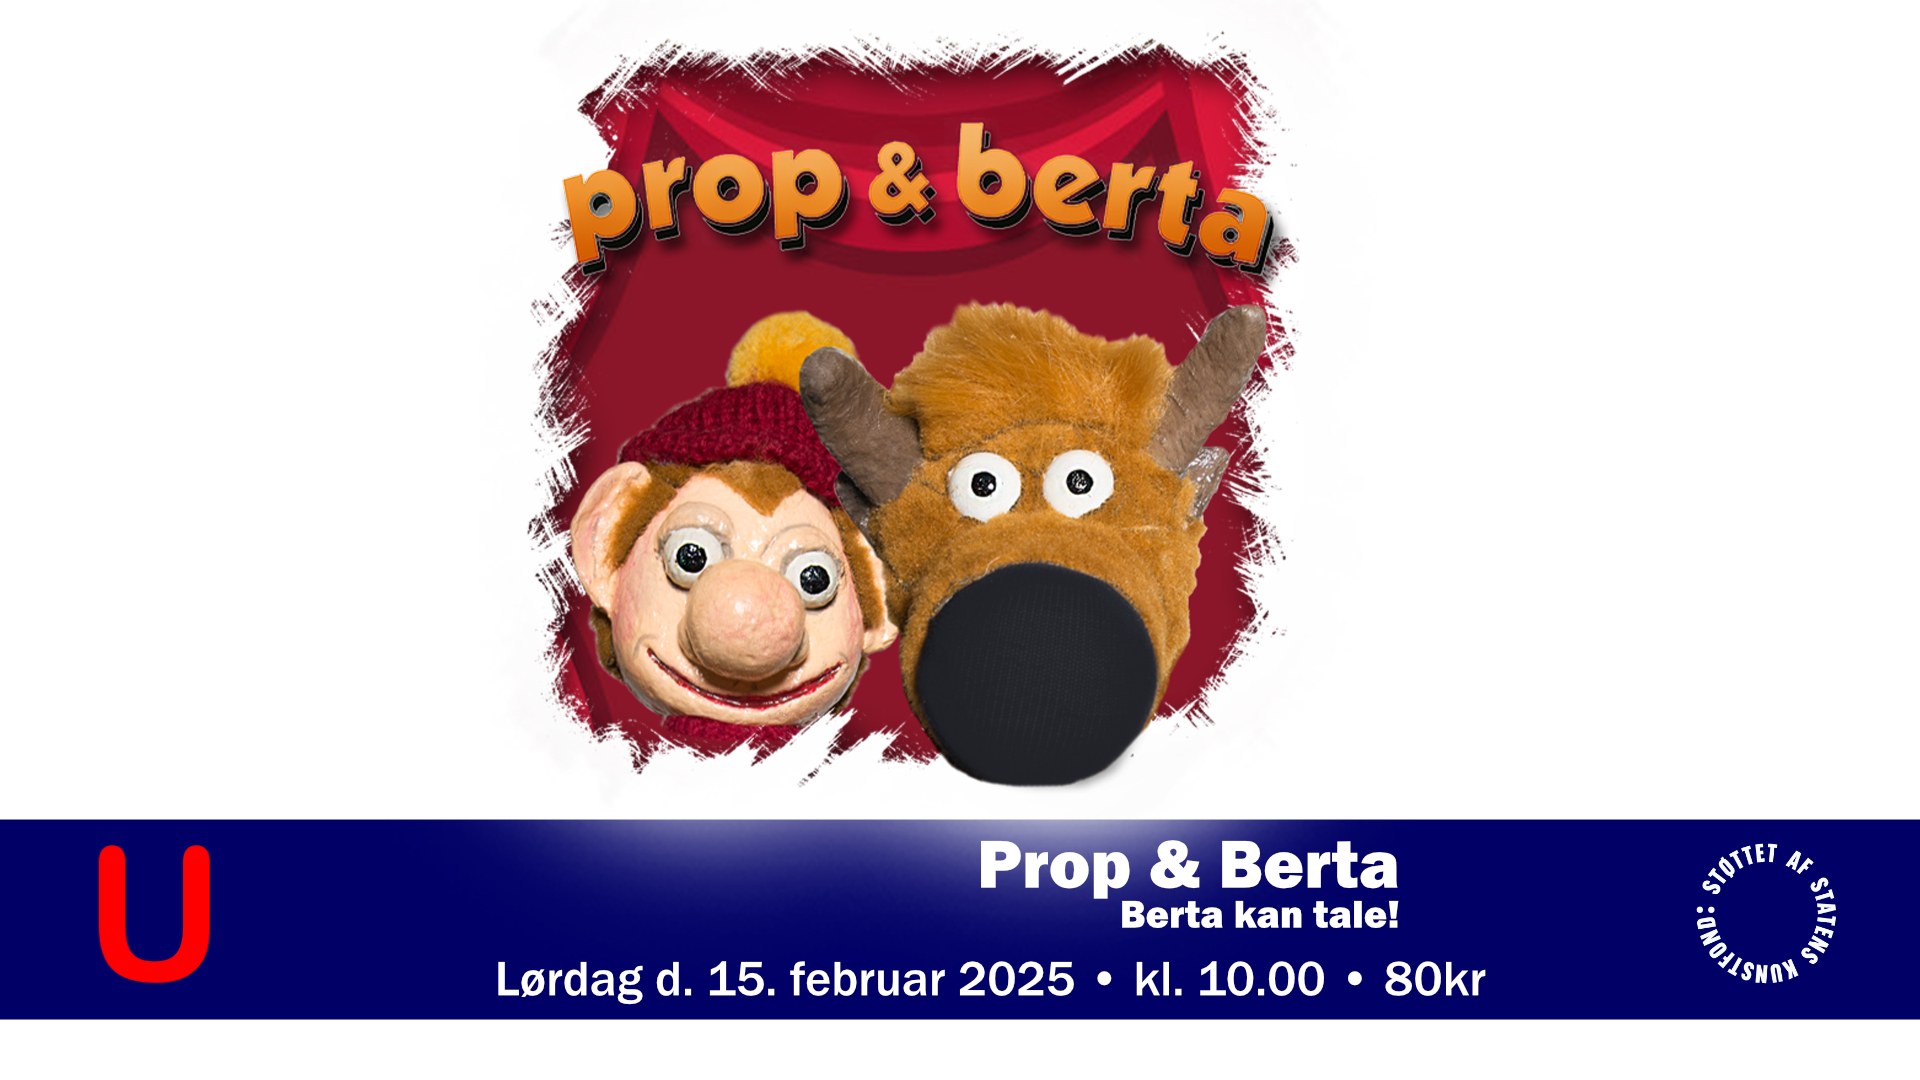 Prop og Berta - Prop kan tale! - 15-02-2025 10:00